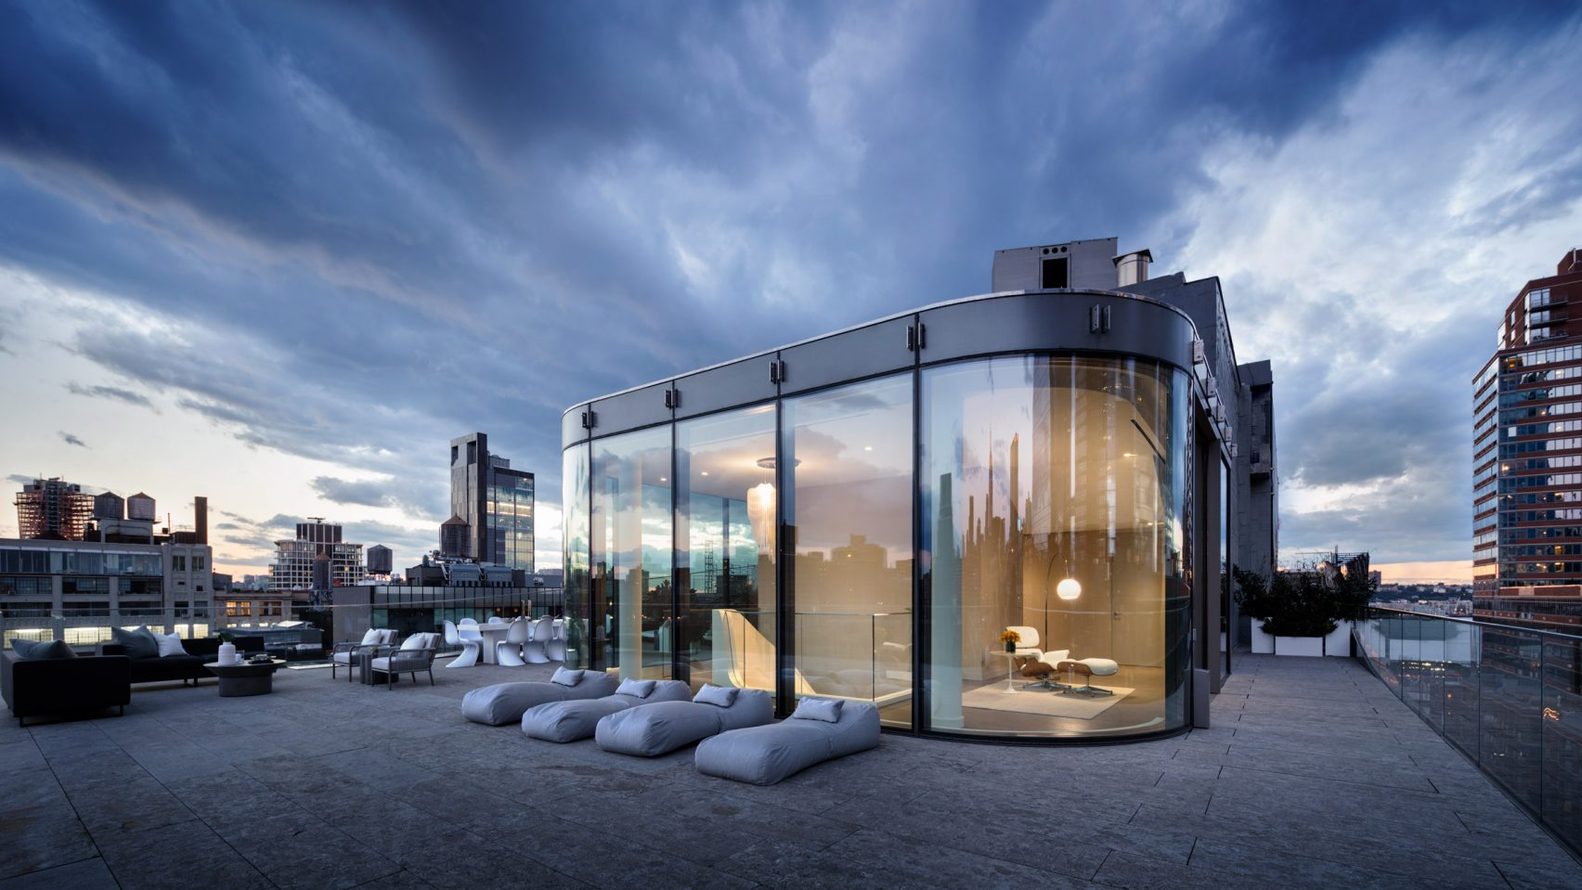 Penthouse 520 West 28th / Zaha Hadid Architects